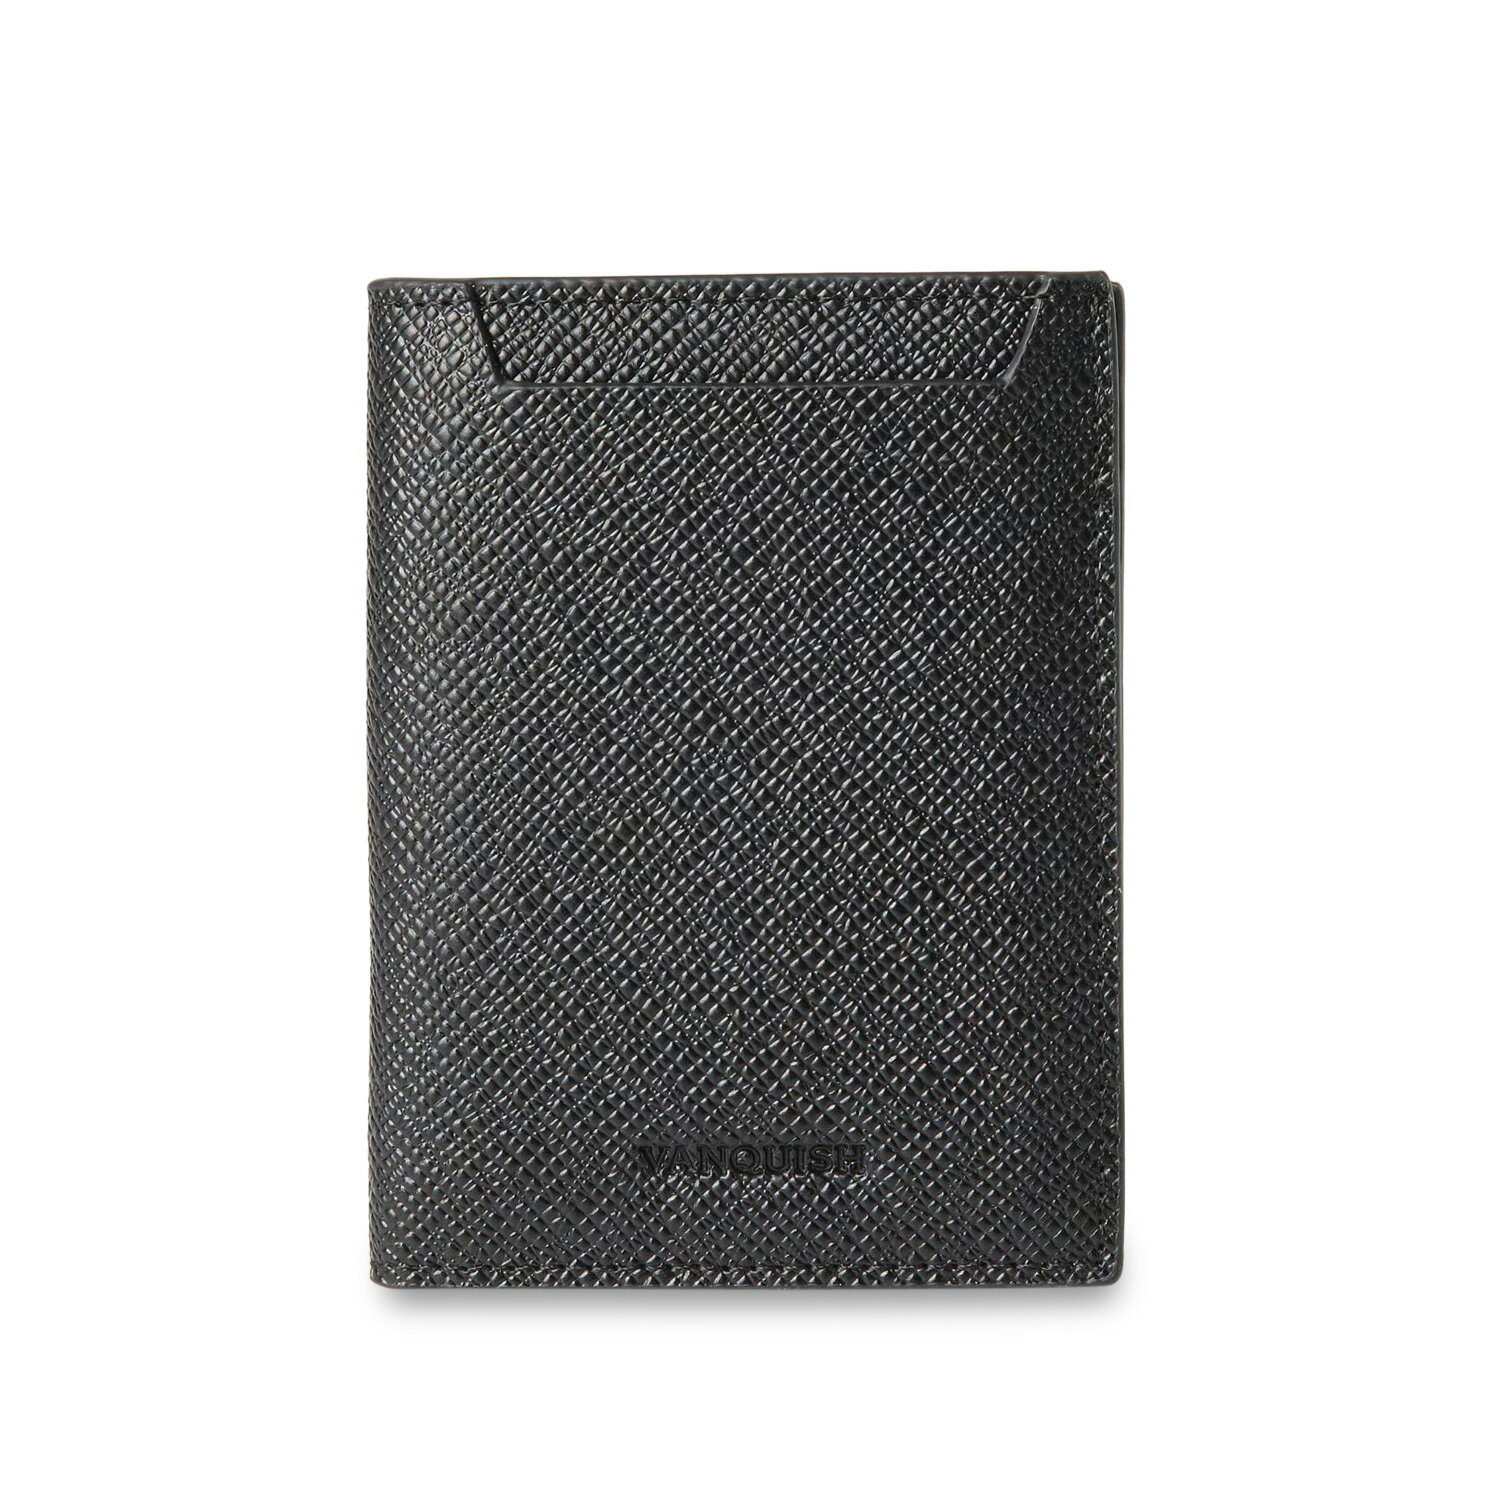 VANQUISH ヴァンキッシュ 二つ折り財布 メンズ 本革 ブラック ネイビー ダーク グリーン 黒 VQM-43290